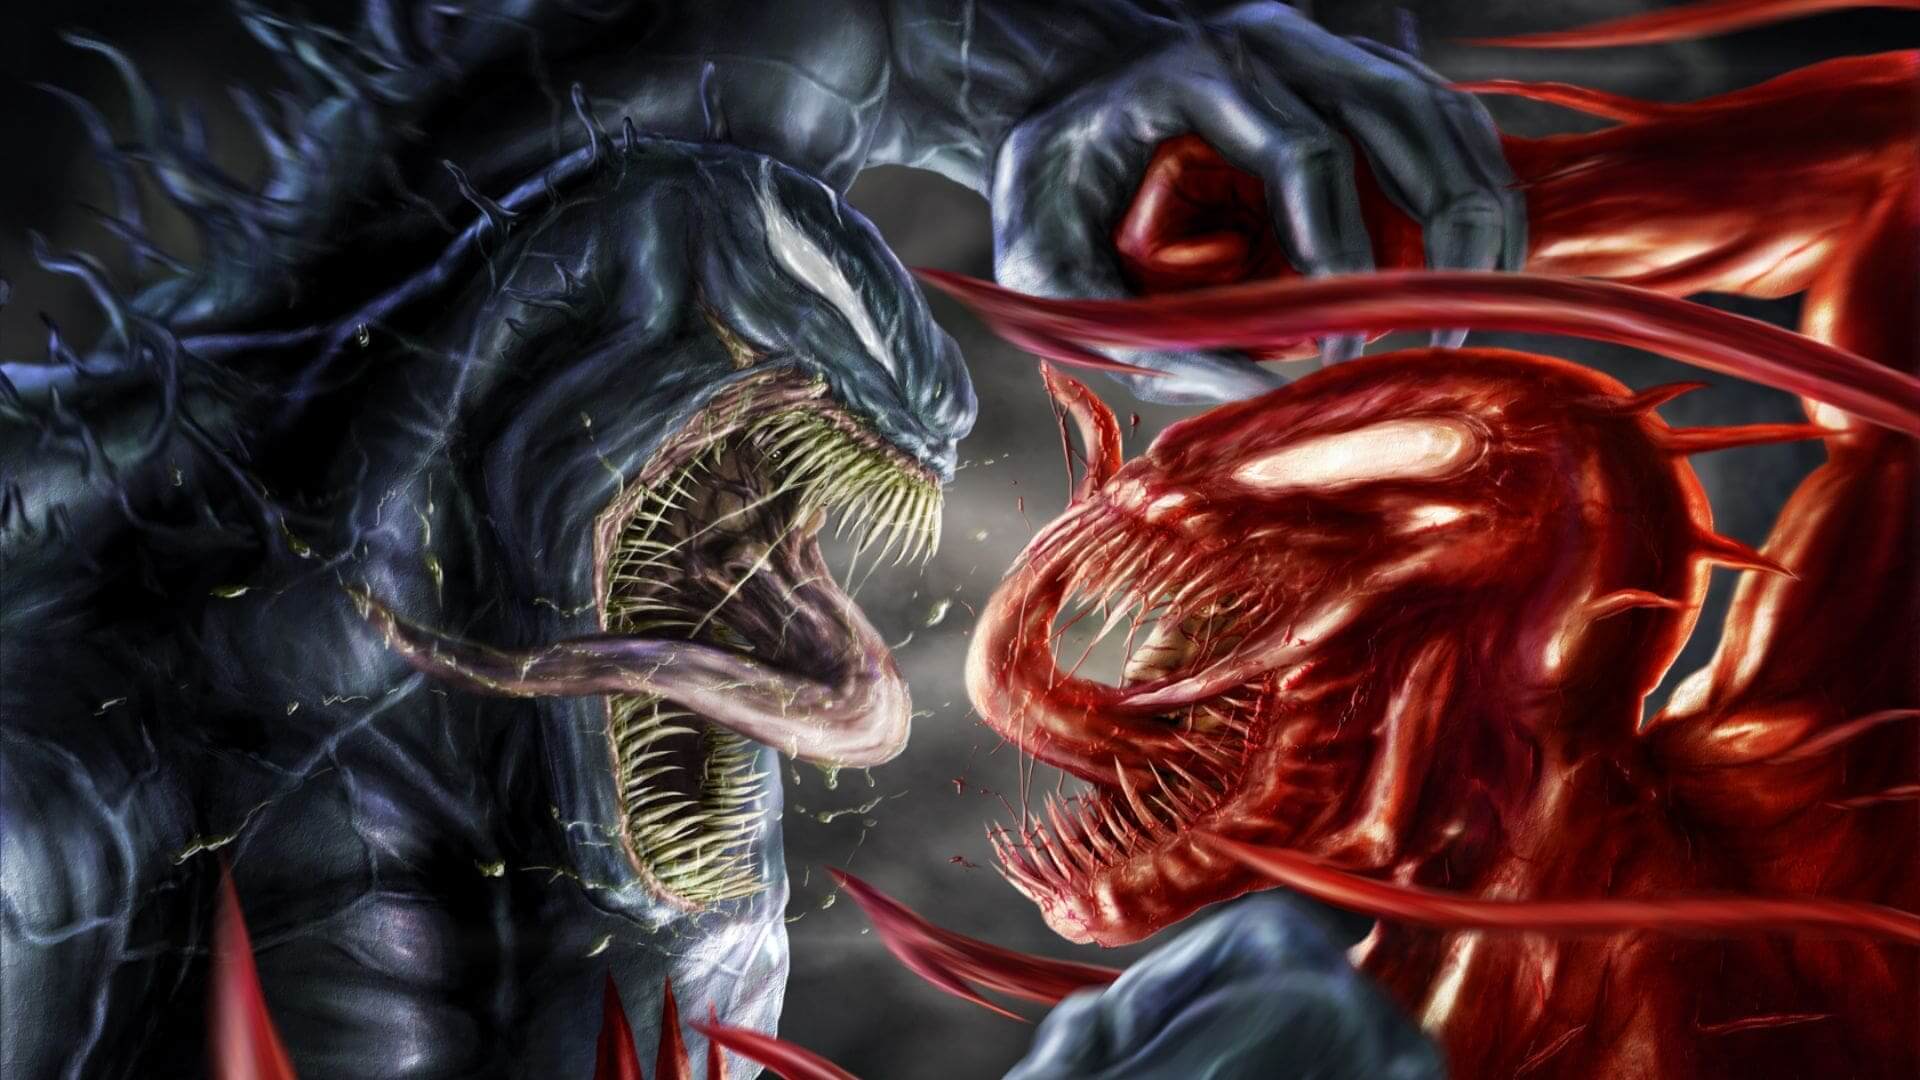 2020 Venom 2 Art Wallpapers